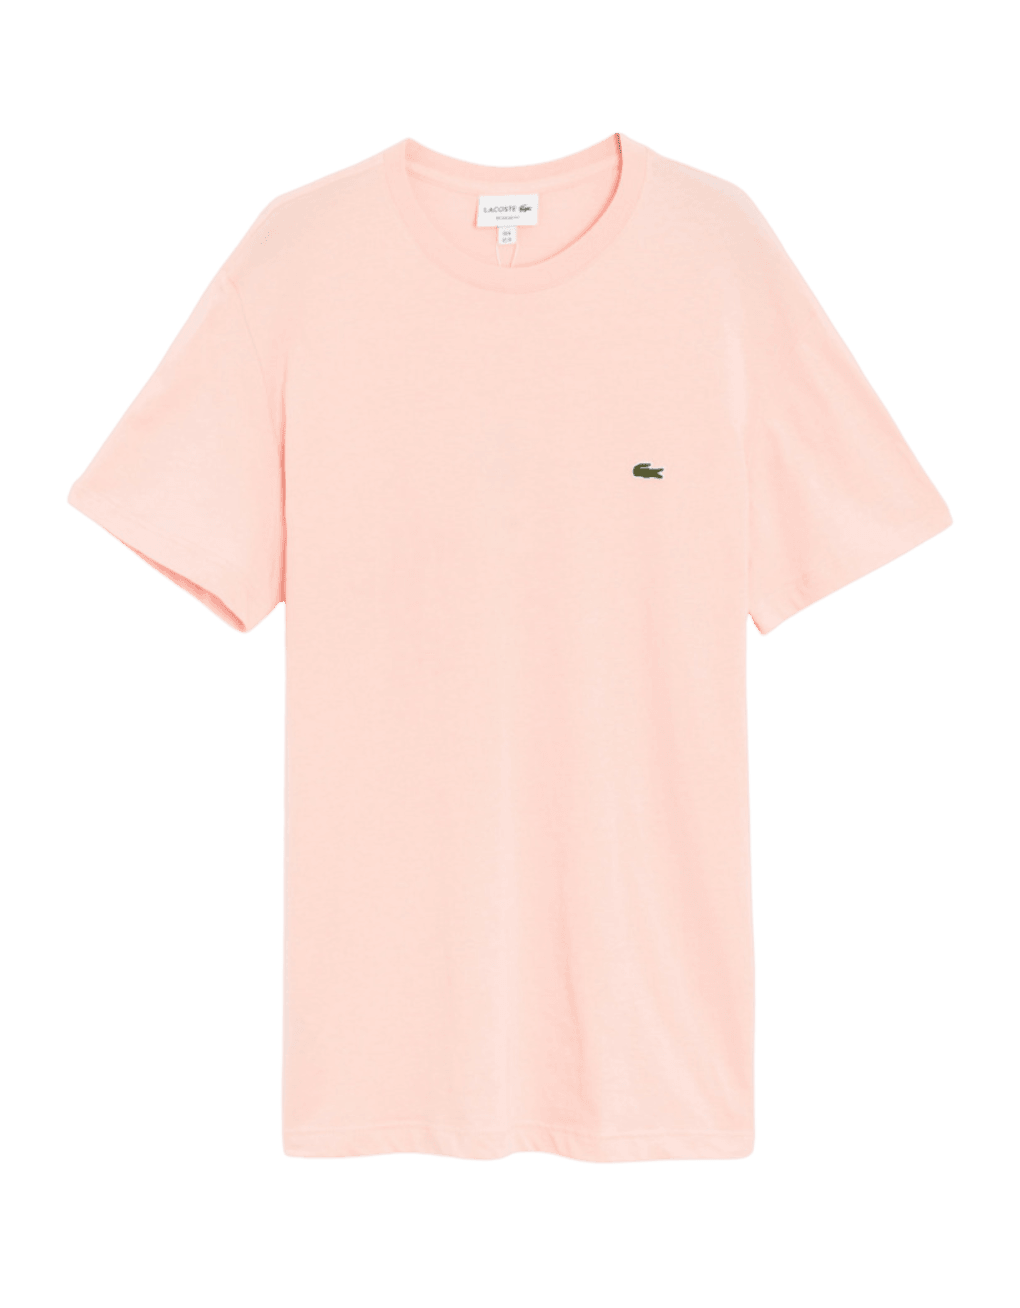 Camiseta Lacoste de algodón con cuello redondo para hombre rosa - ECRU